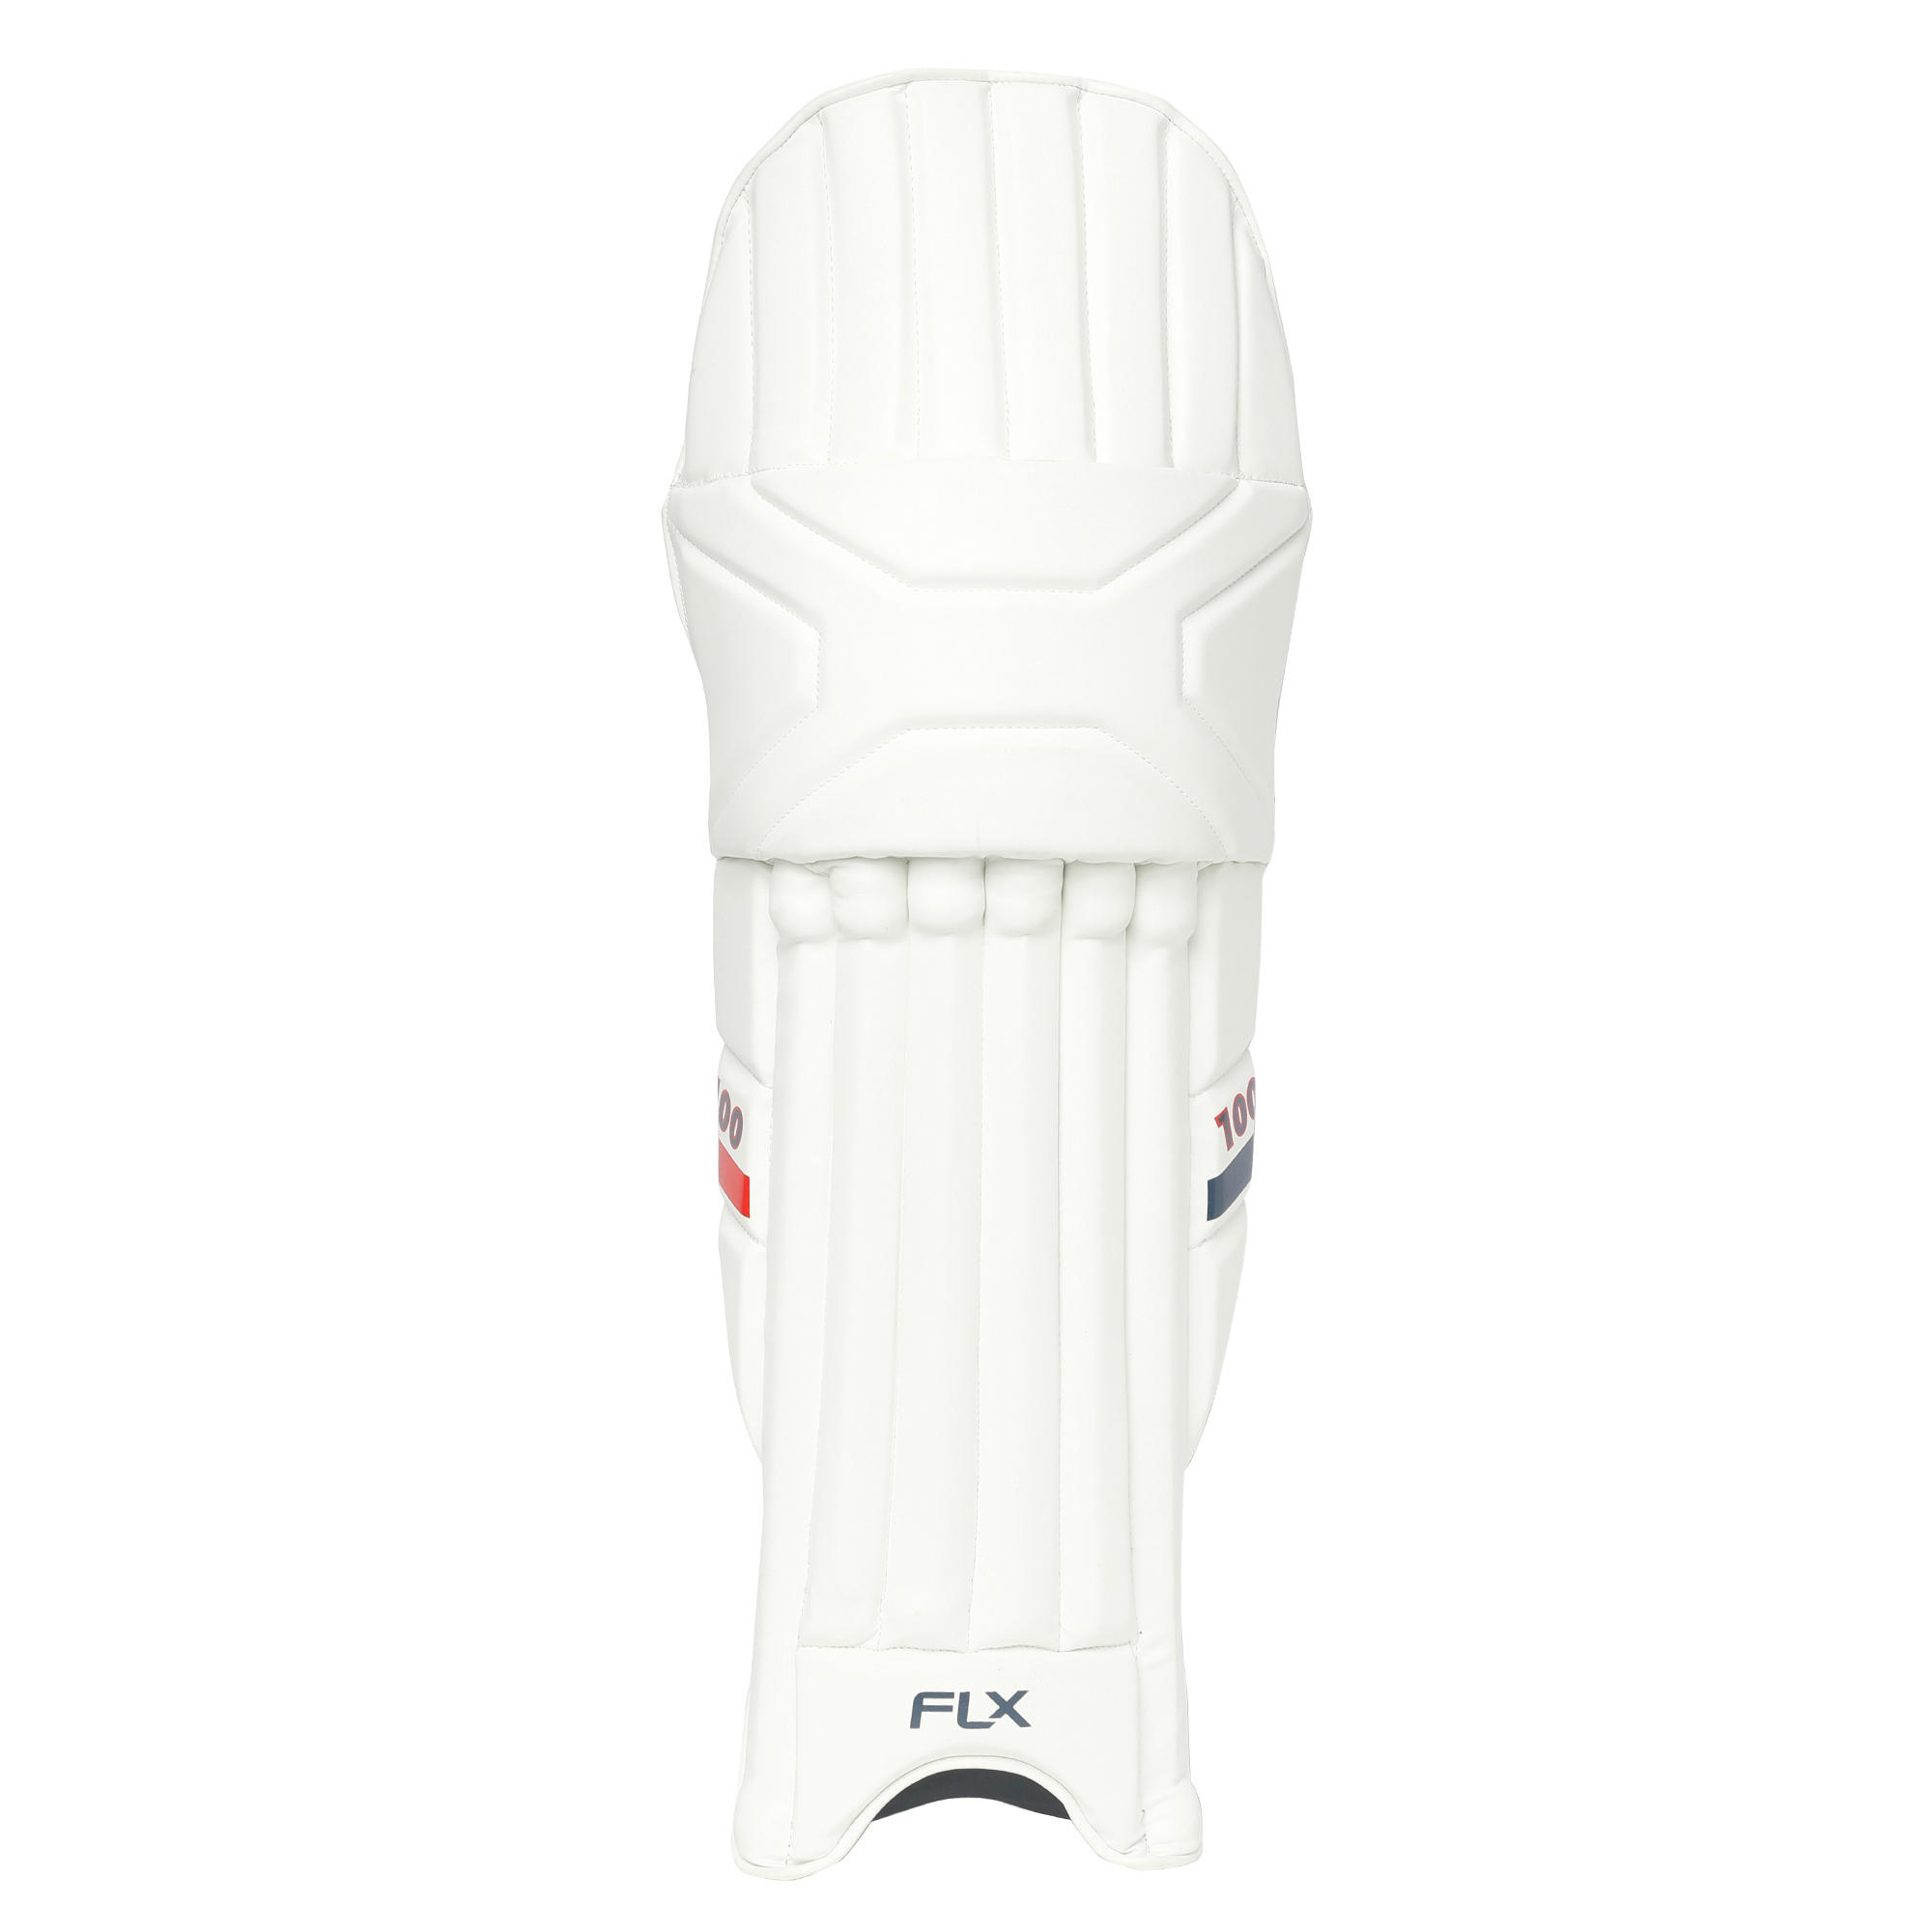 BP 500 Cricket Batting Pads British Standard – Adults - Dark petrol blue,  Teal green, Snow white - Flx - Decathlon